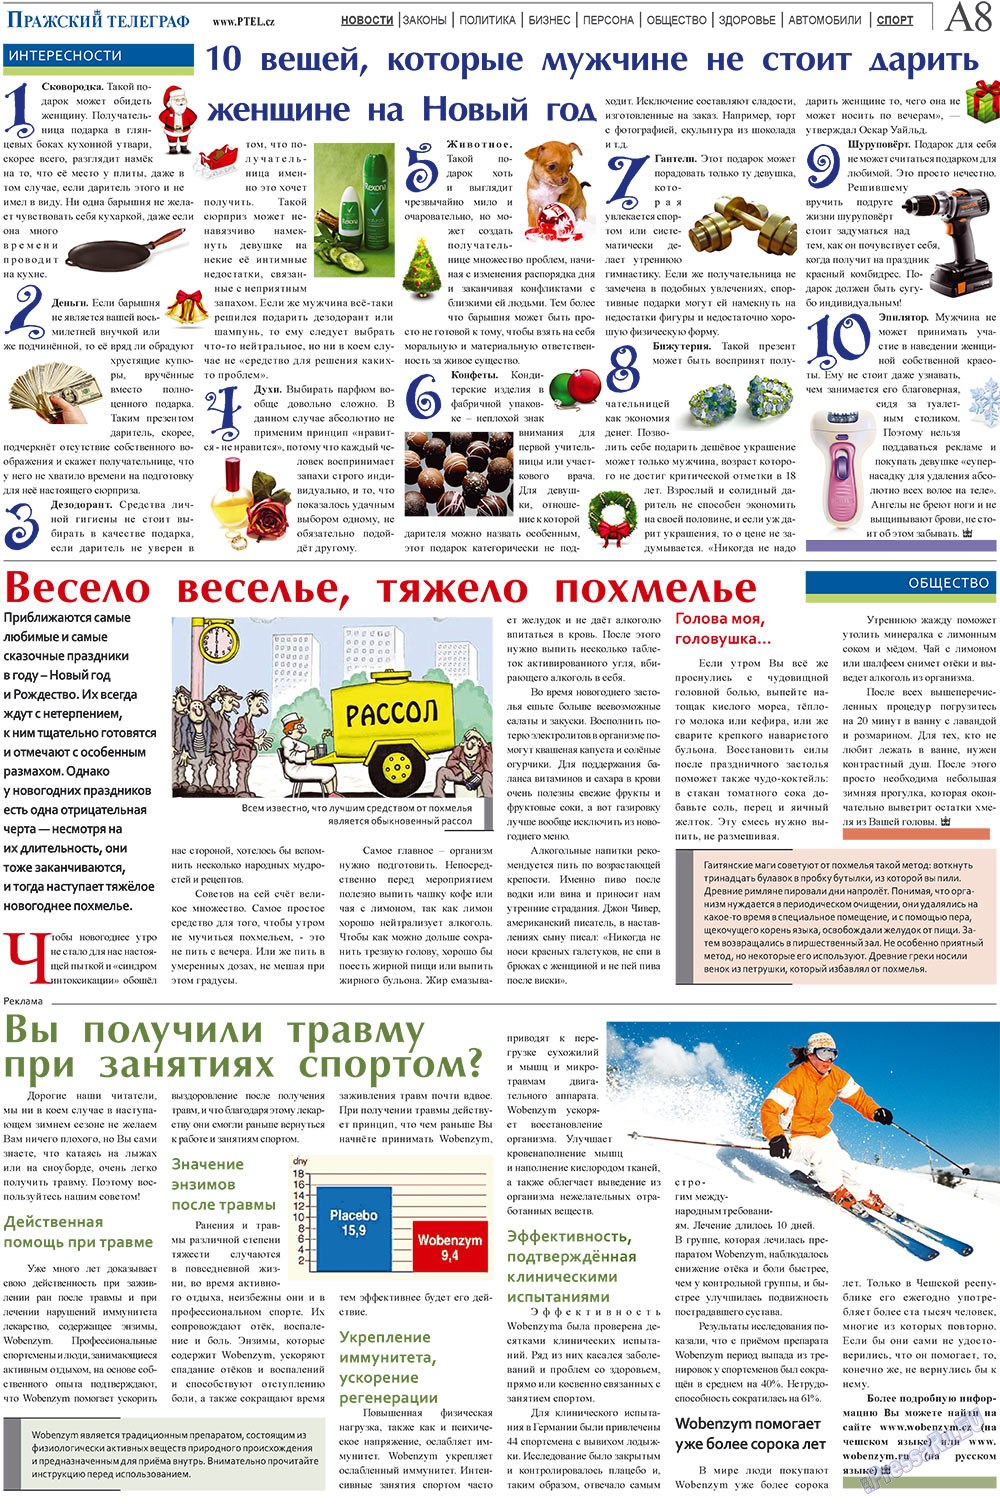 Пражский телеграф, газета. 2009 №36 стр.8